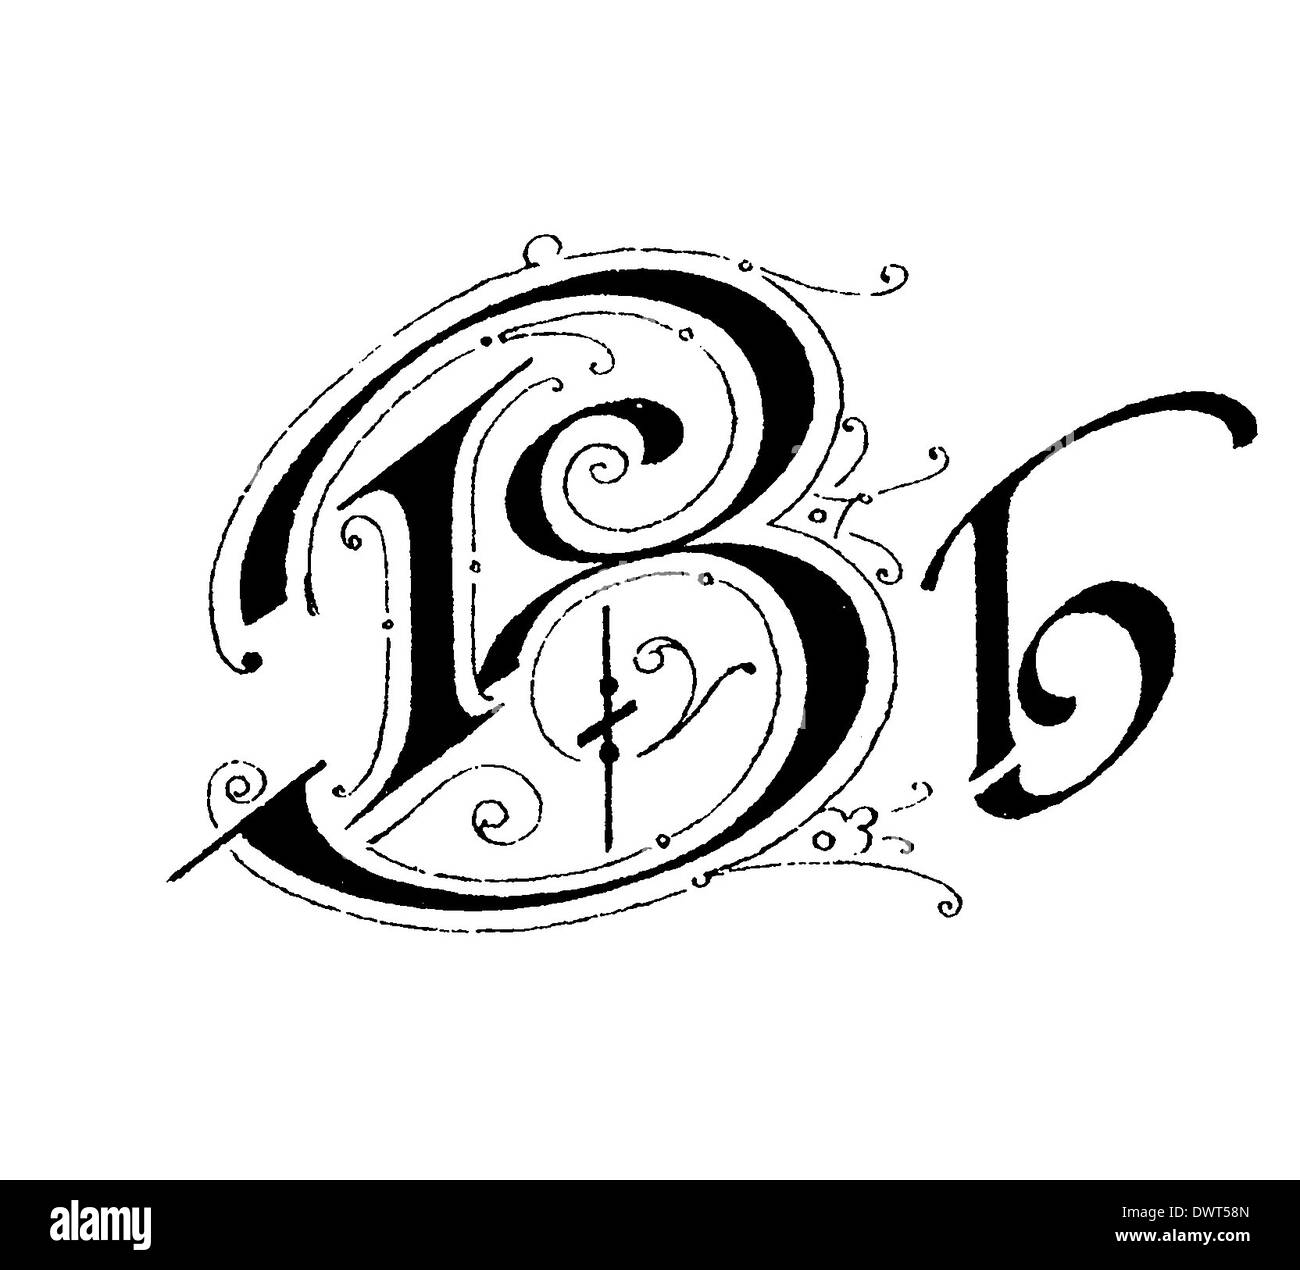 Alphabet character, letter B Stock Photo